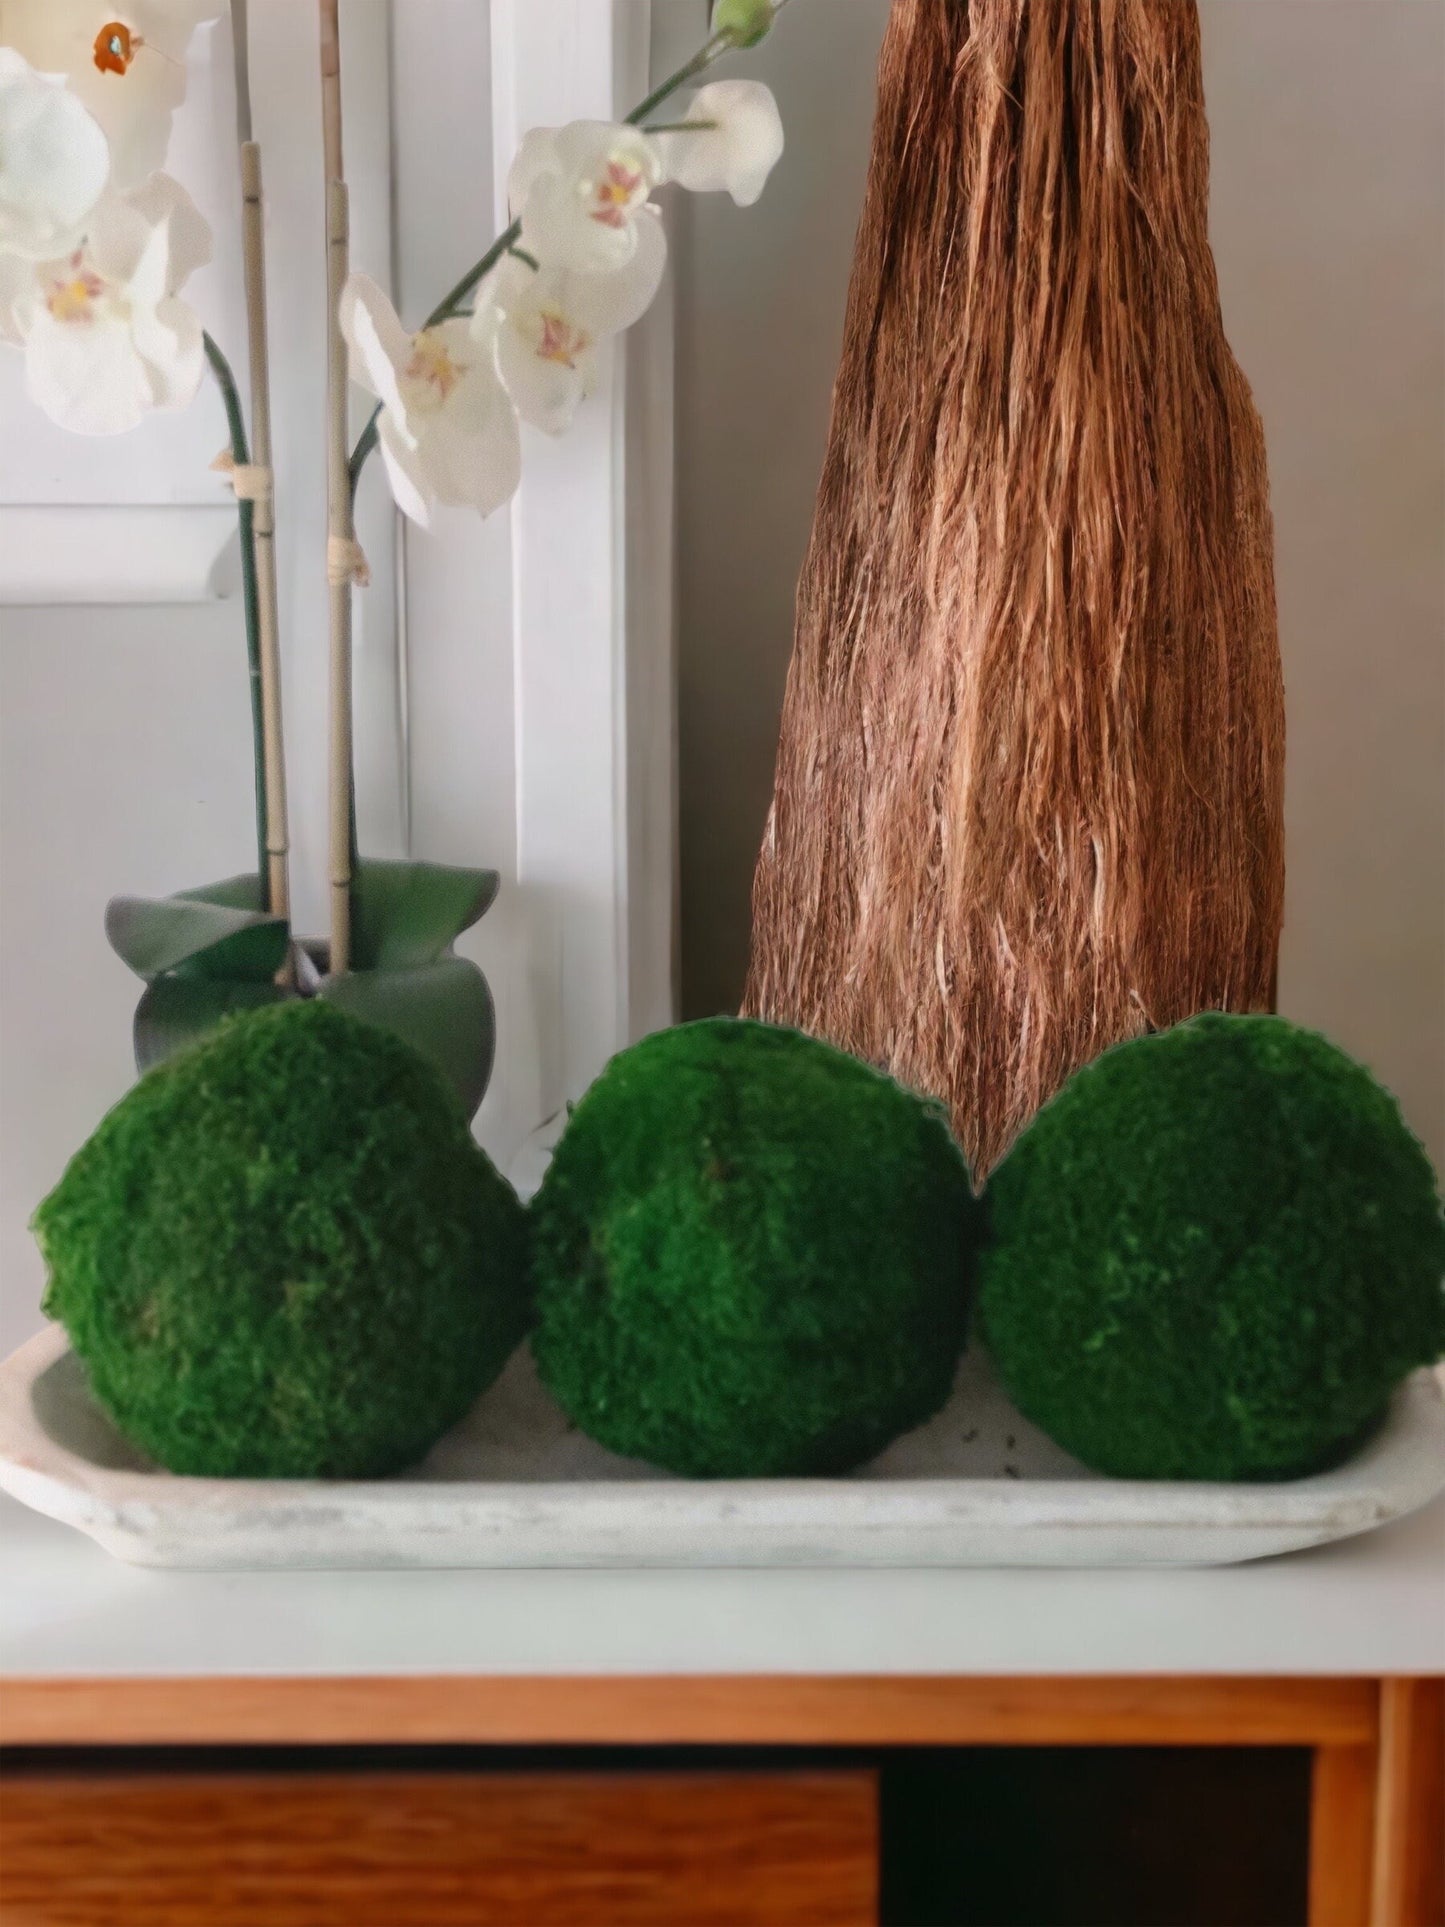 5" Decorative Preserved Moss Balls